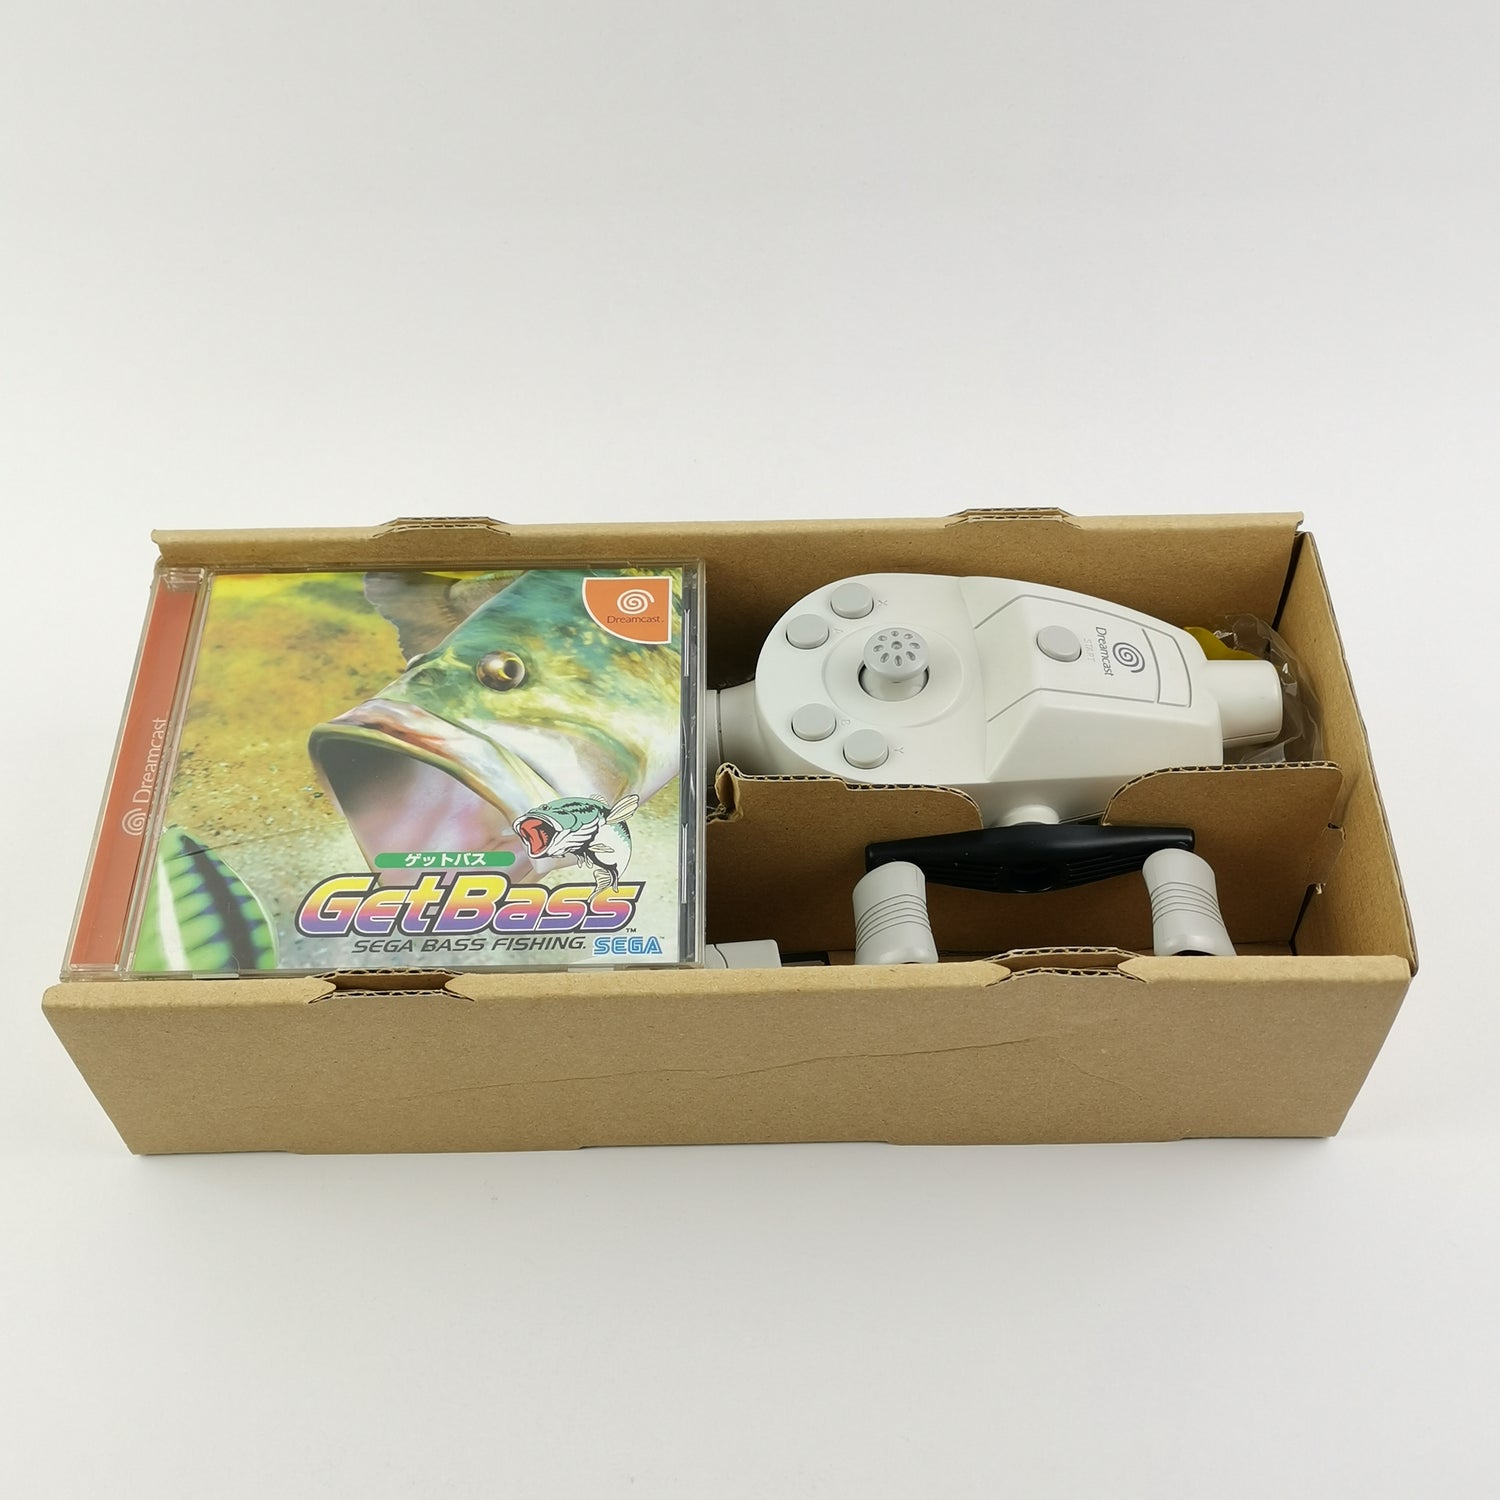 Sega Dreamcast Game: Get Bass Sega Bass Fishing Pak with Fishing Rod - OVP DC JAPAN